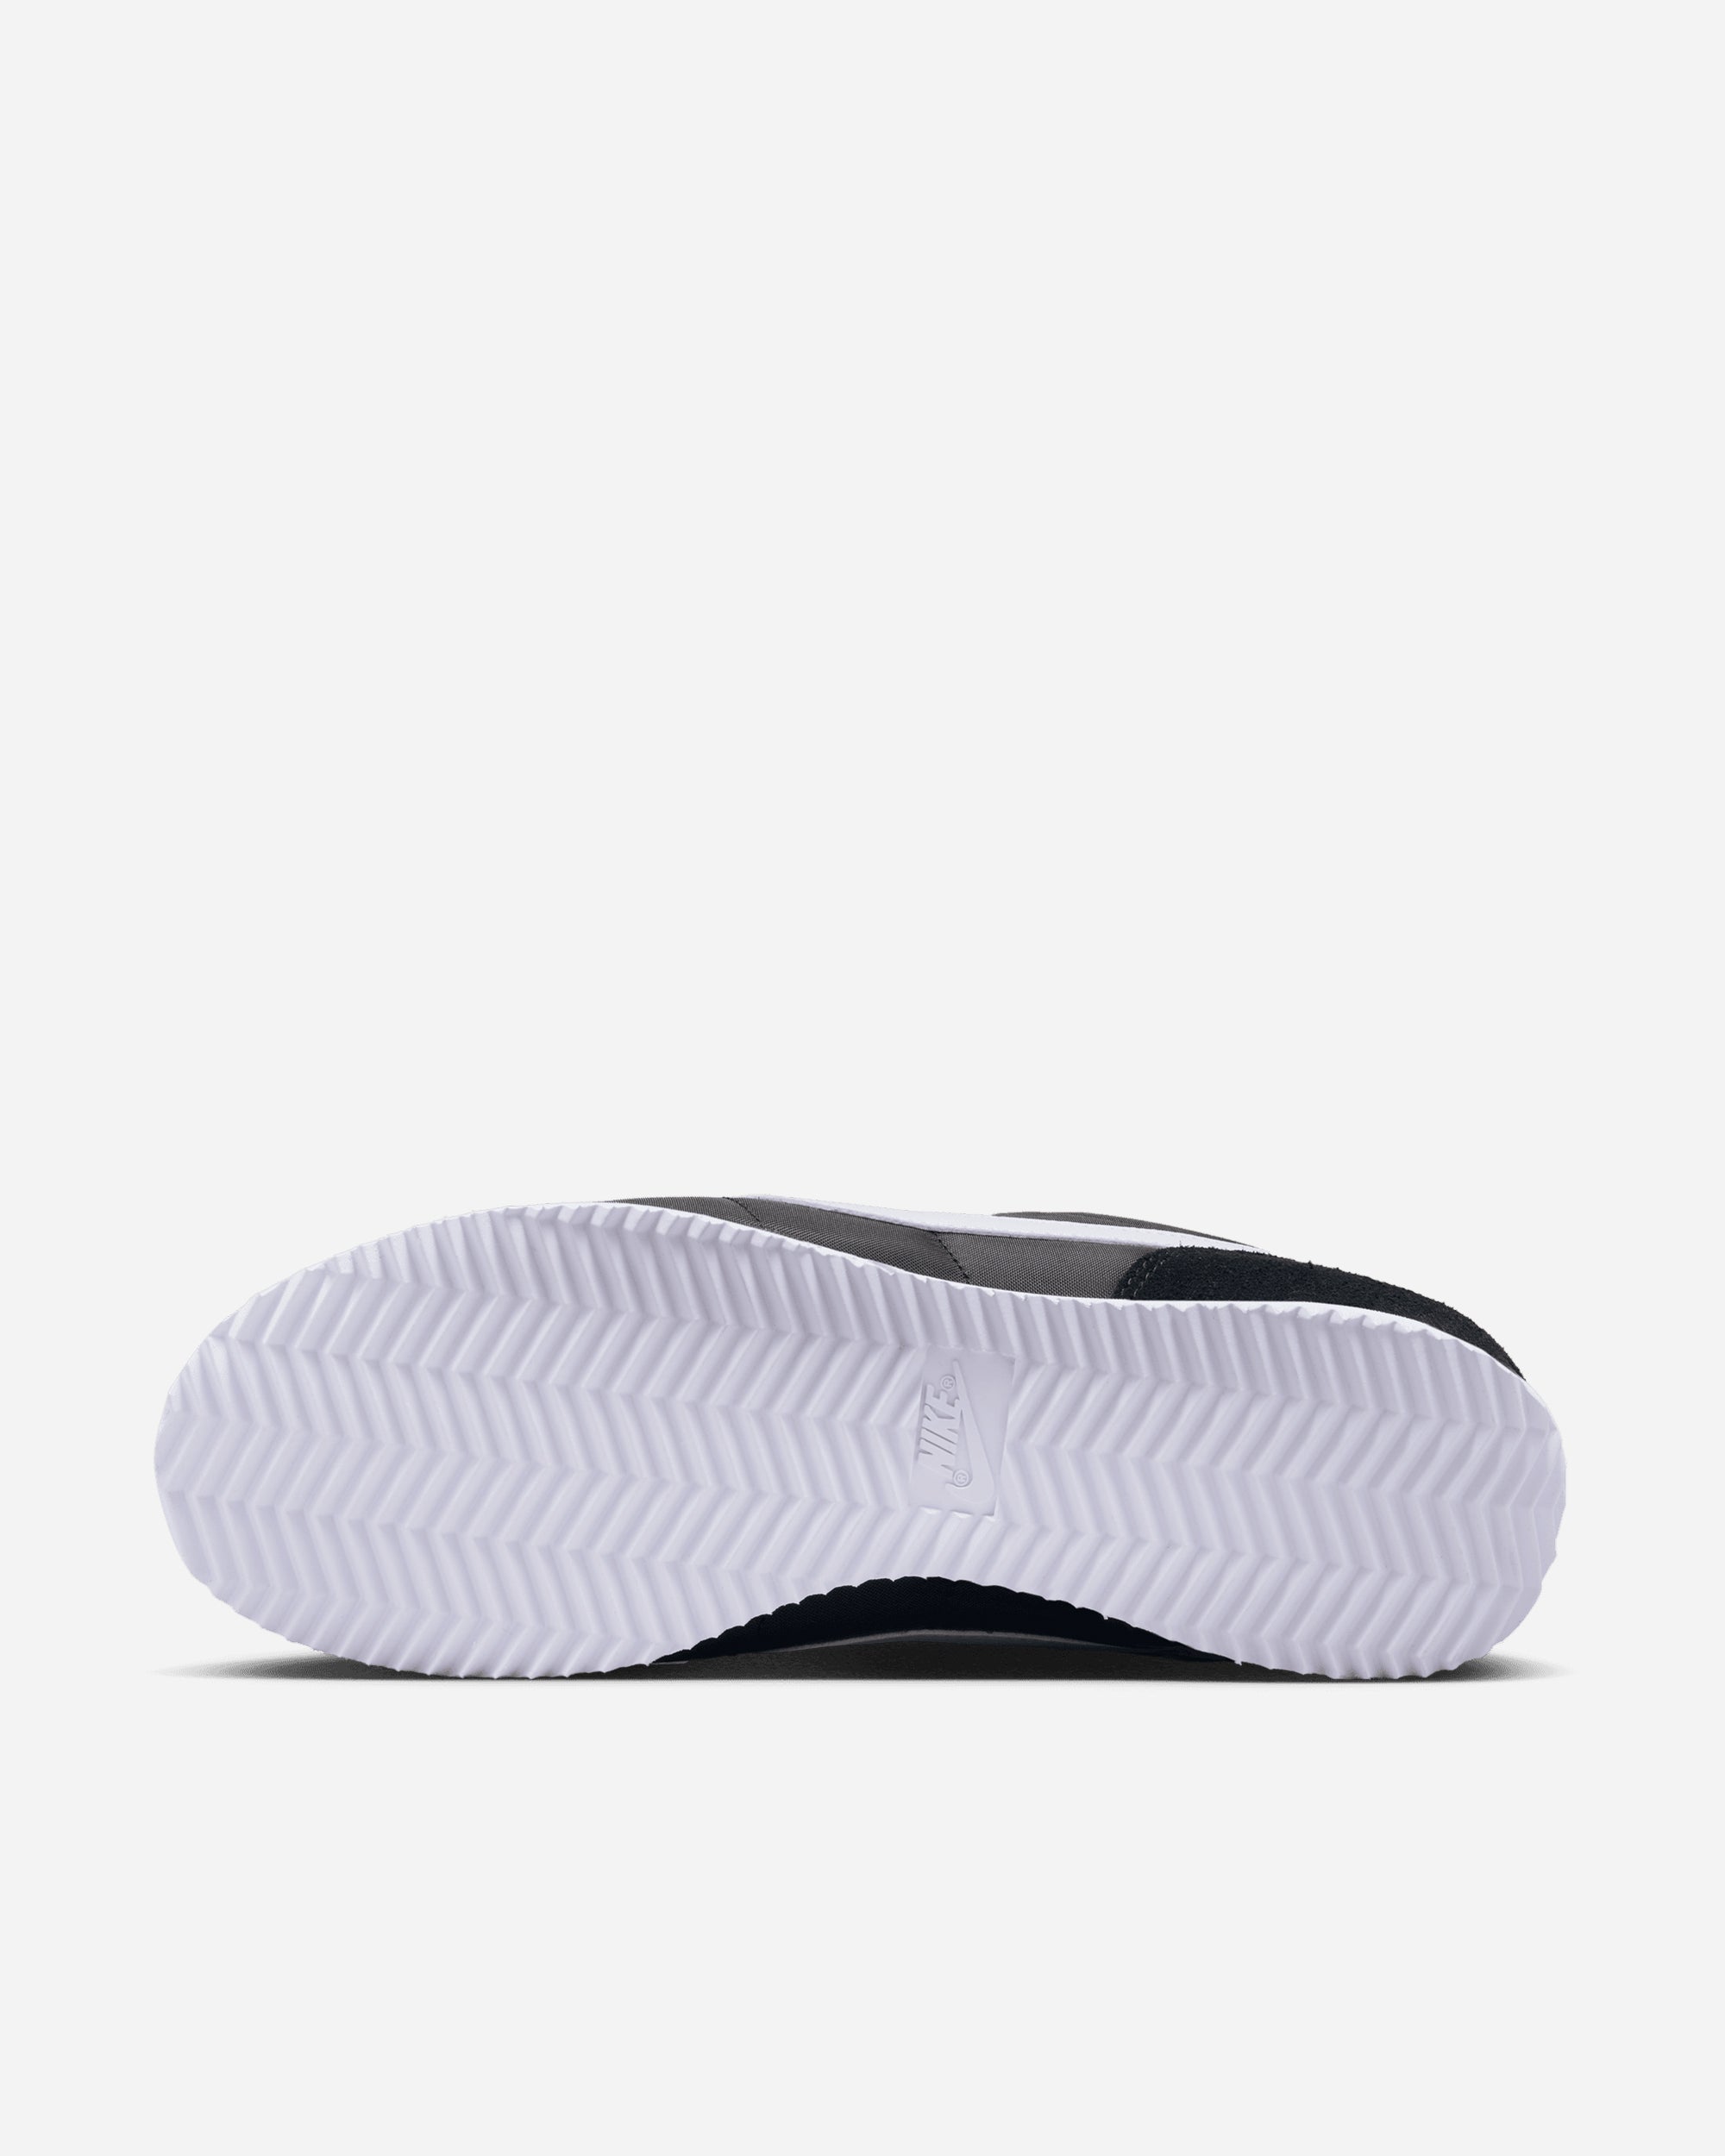 Nike Cortez BLACK/WHITE DZ2795-001